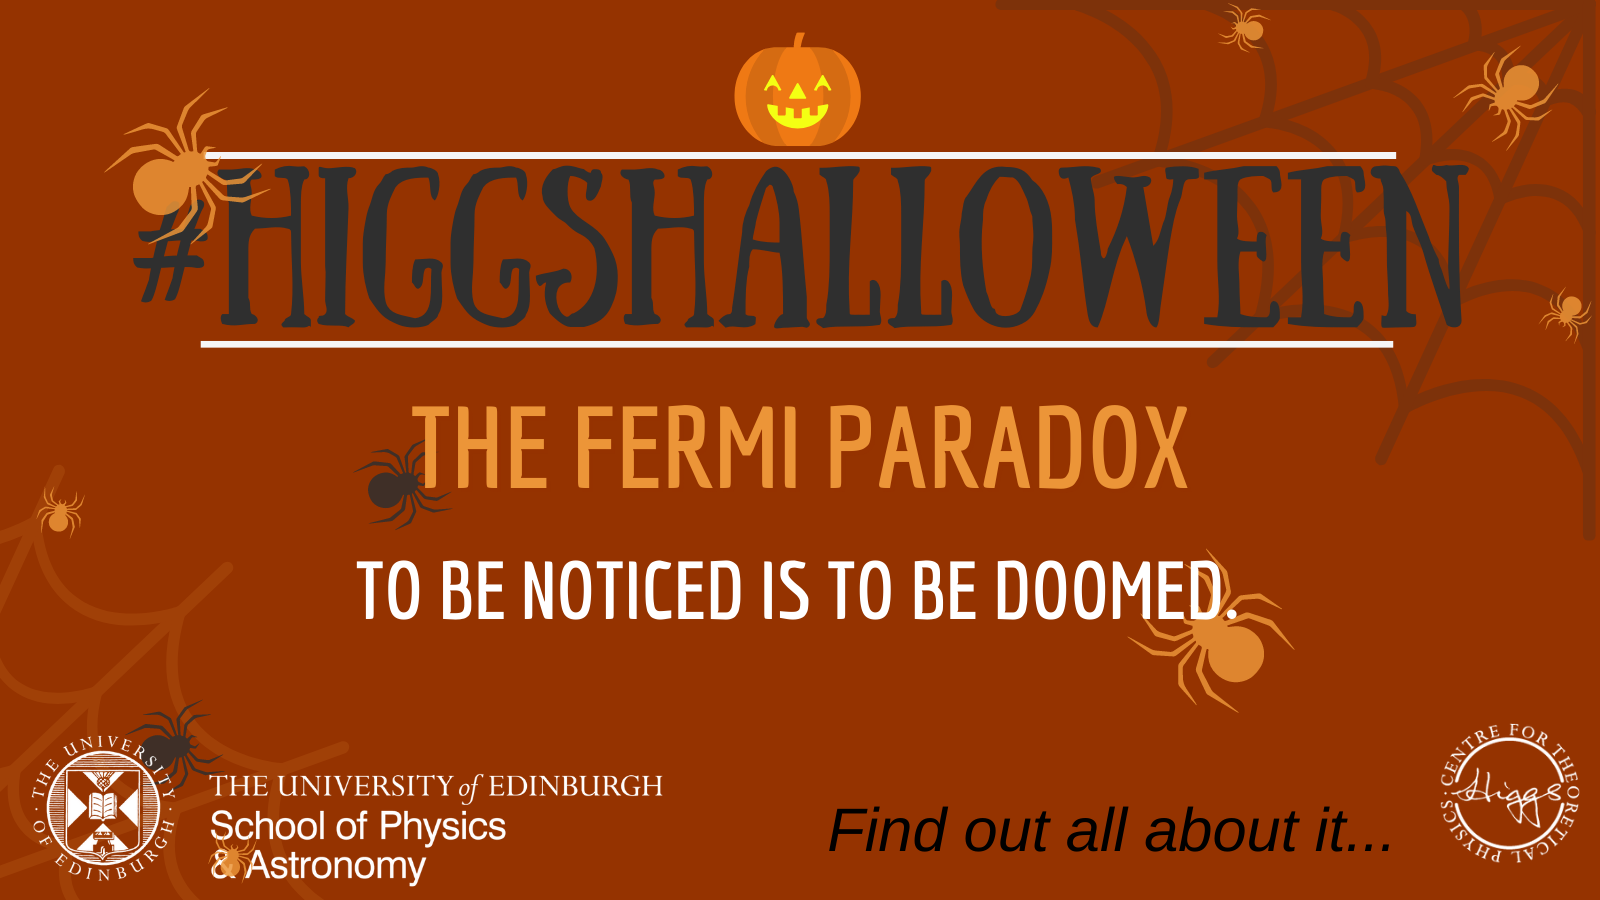 Higgs Halloween Fermi Paradox Banner